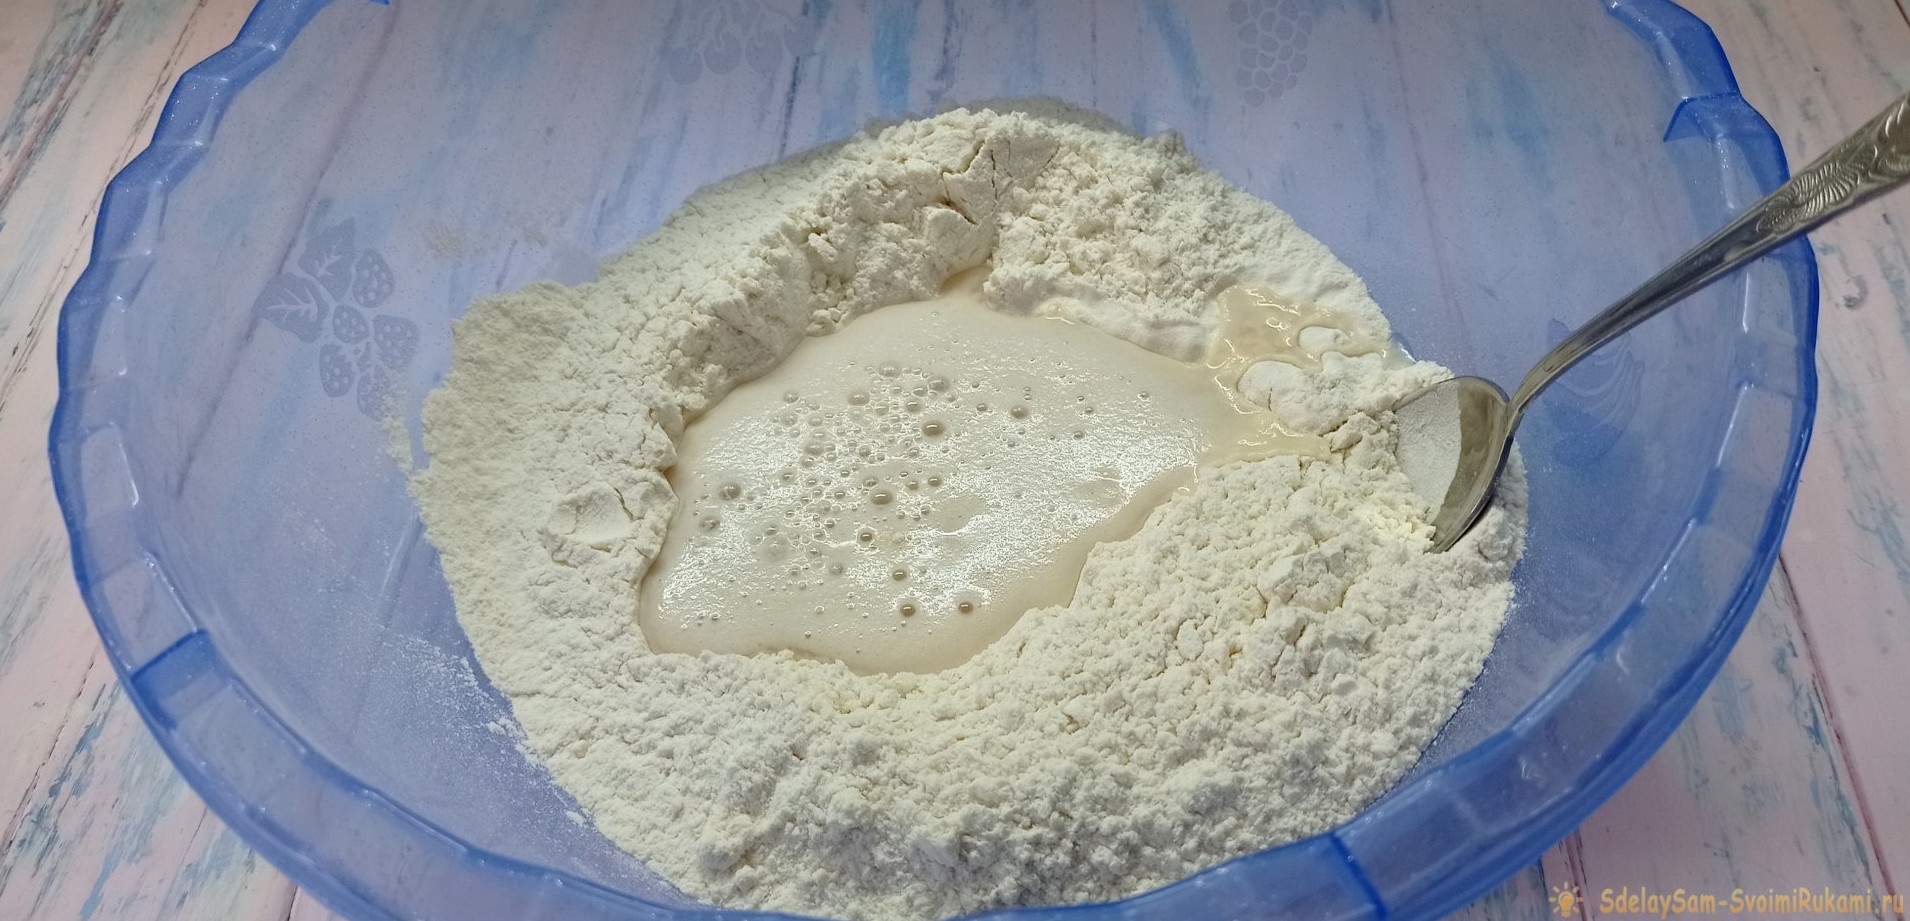 пельменное тесто рецепт на кипятке и раст масле с фото пошагово фото 74